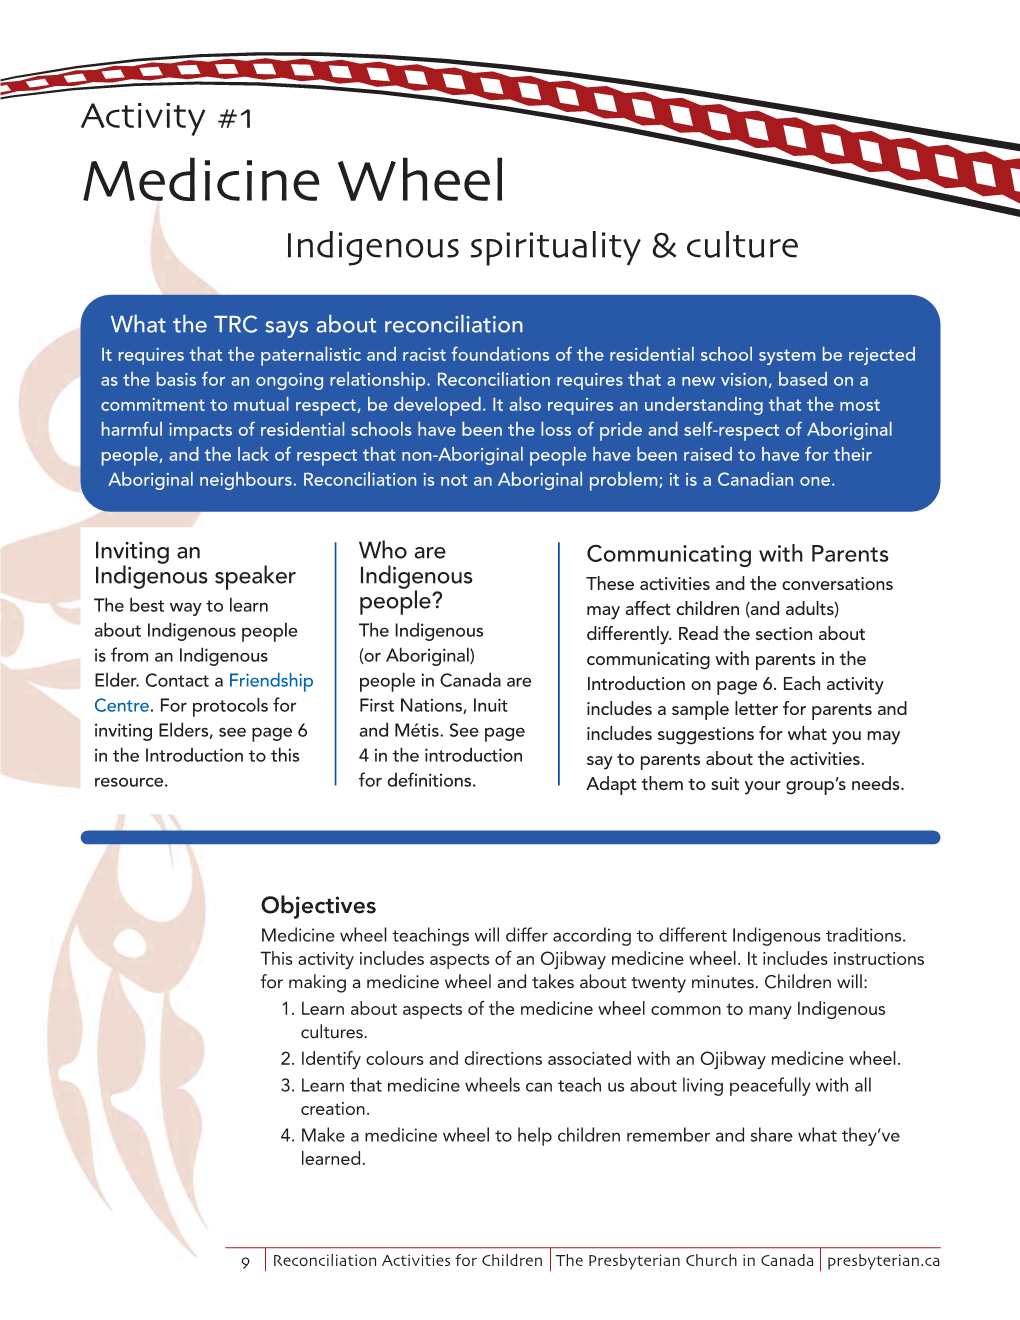 Medicine Wheel Indigenous Spirituality & Culture